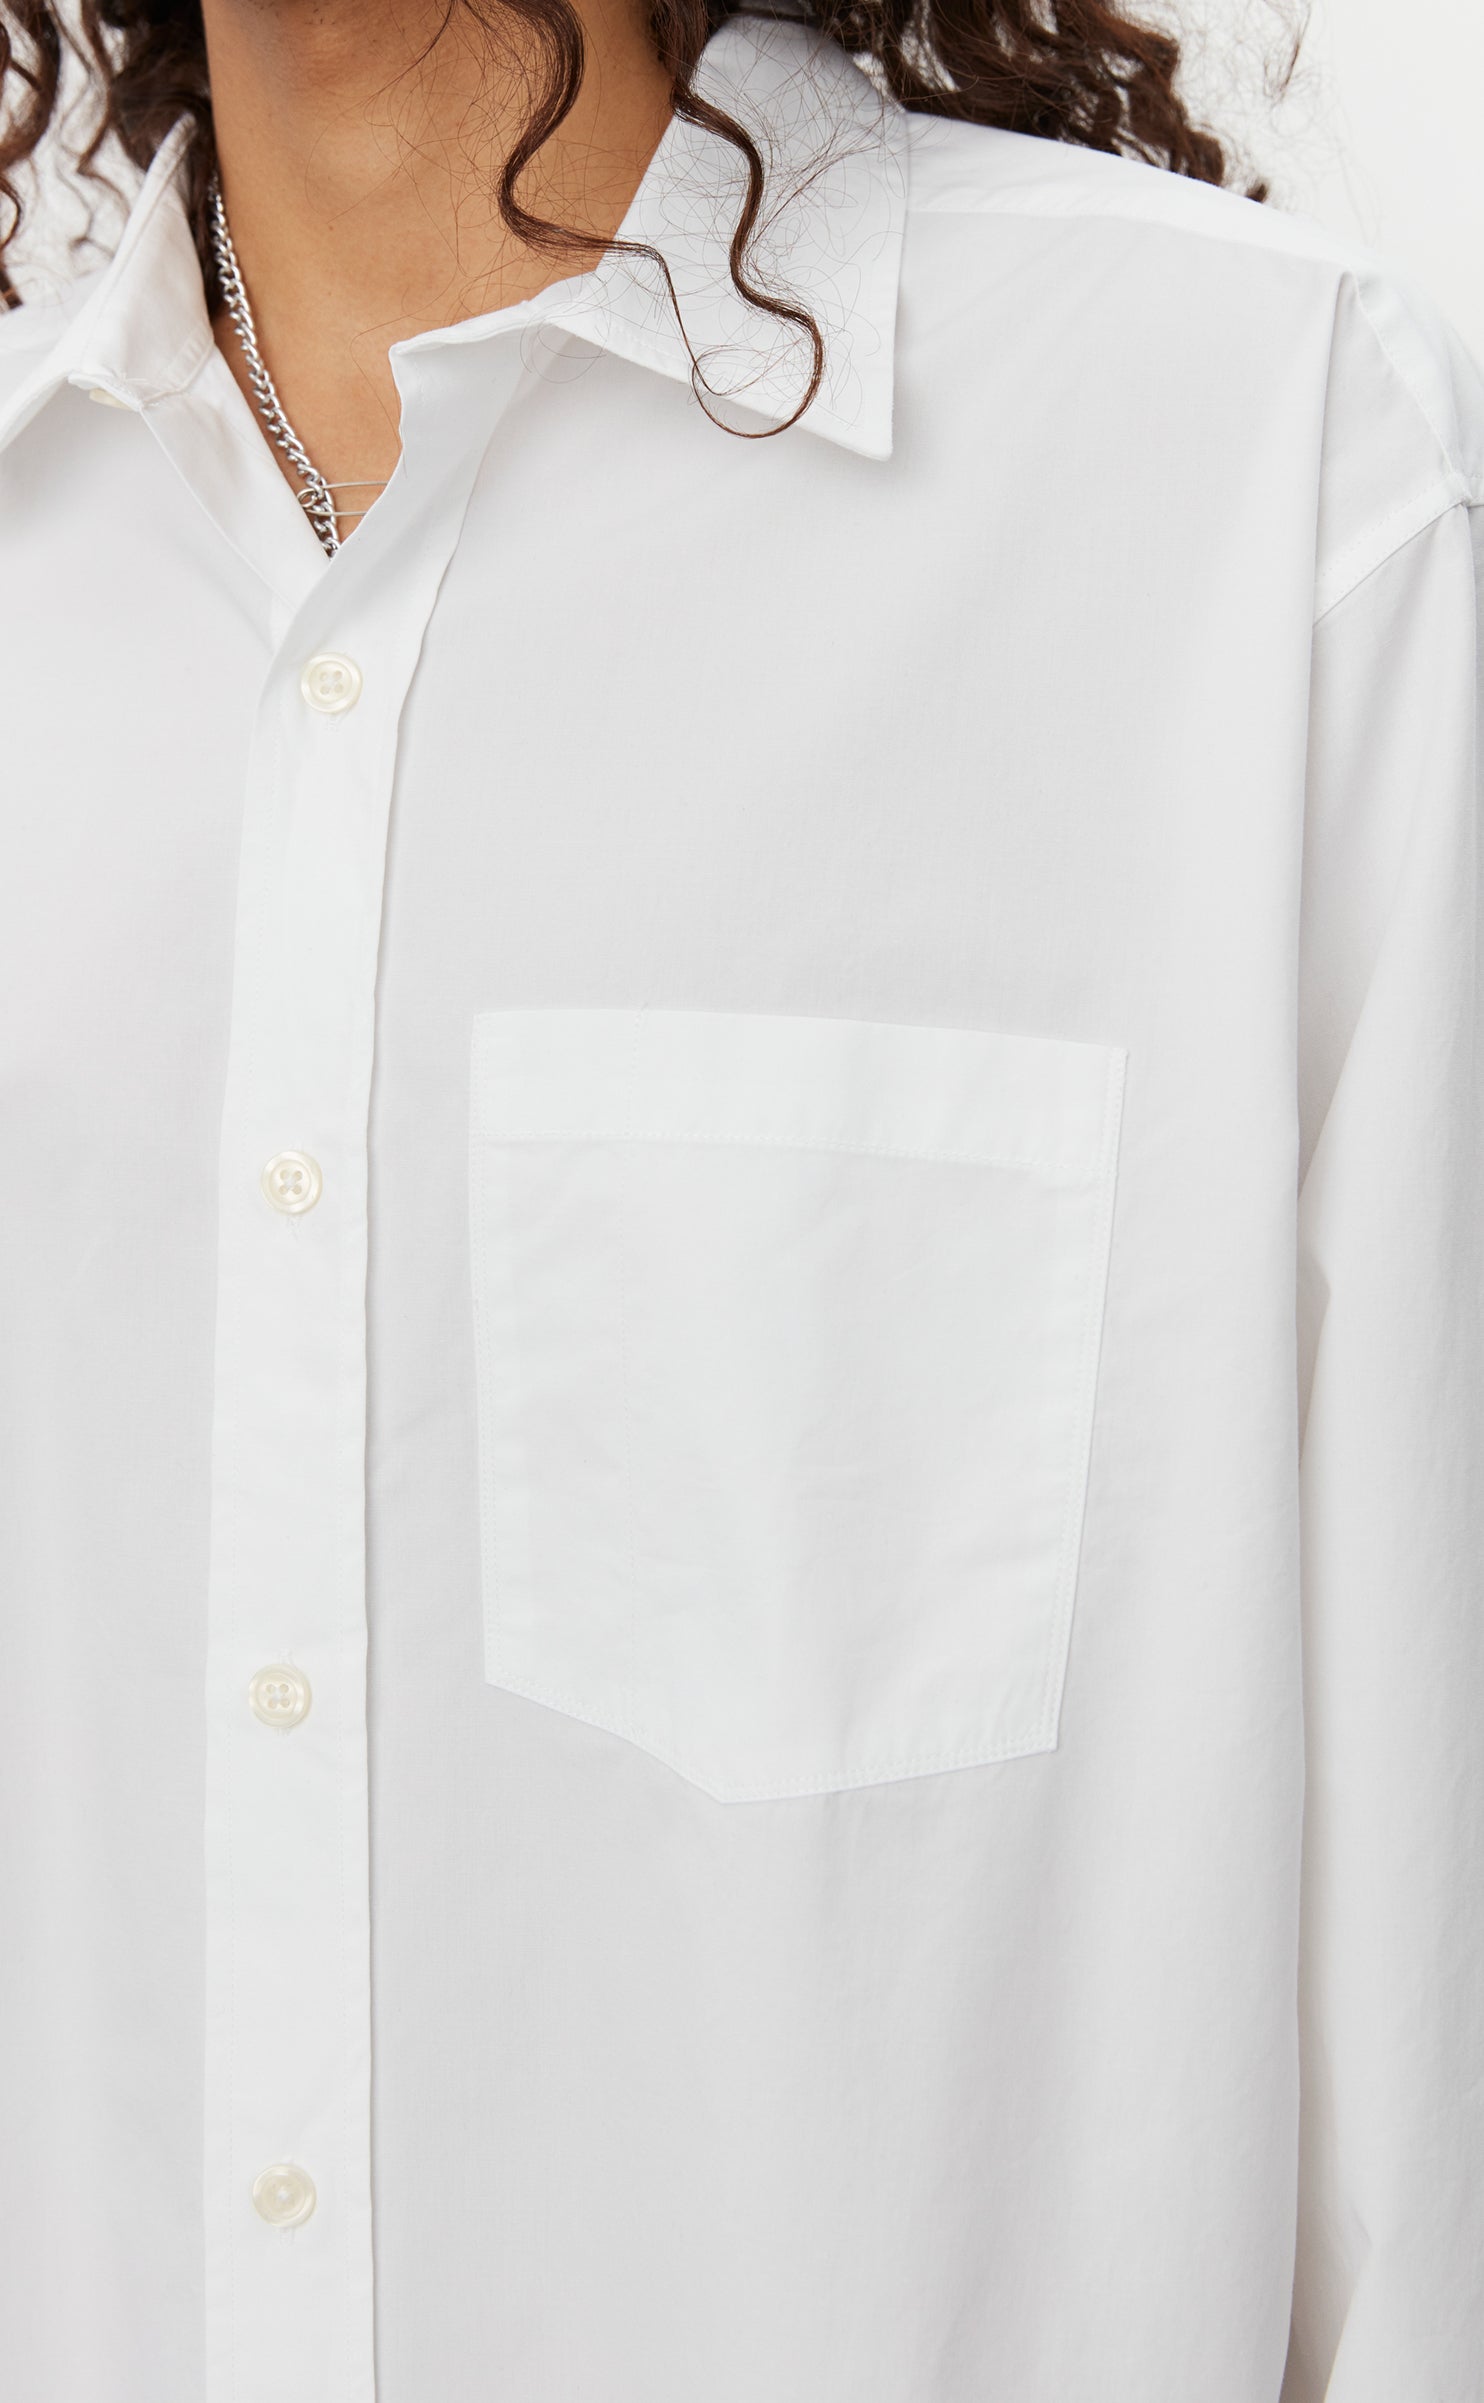 Convenient Shirt - White